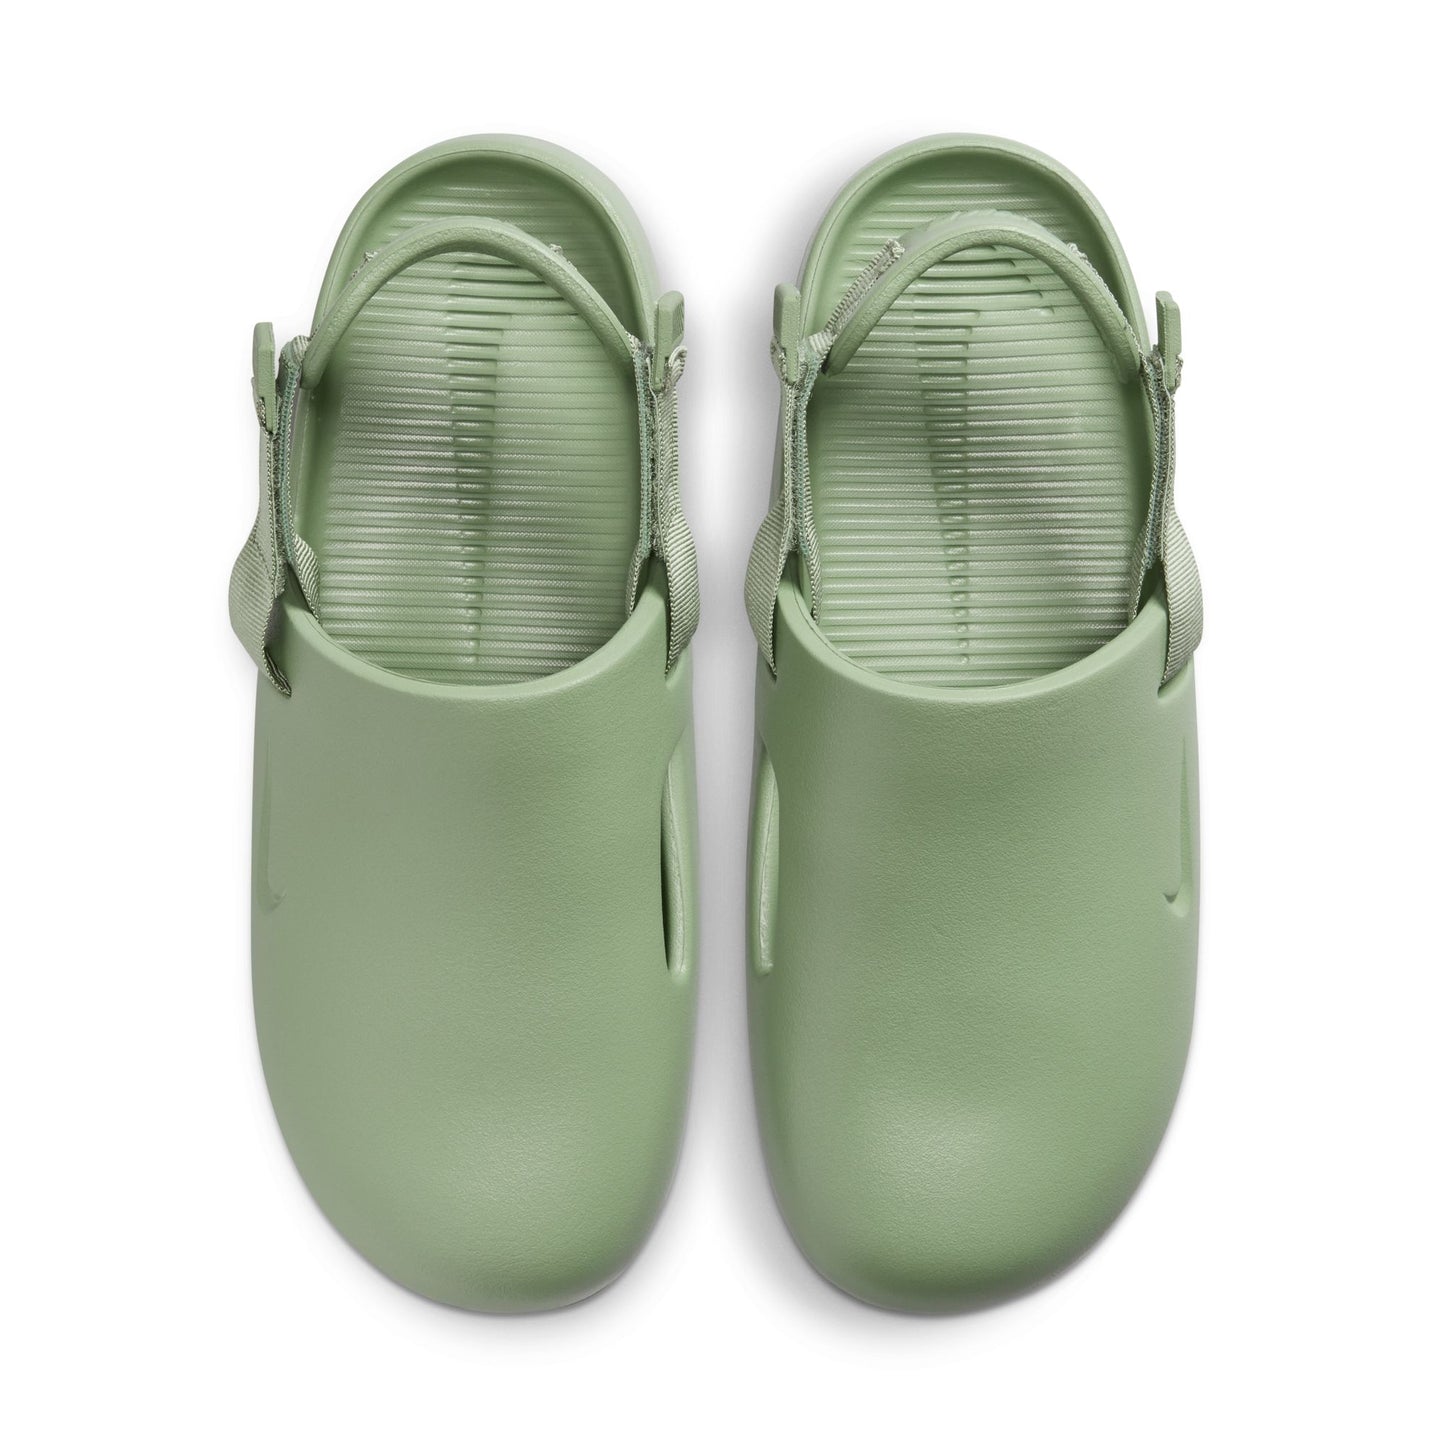 Men's Nike Calm Mule - "Oil Green"